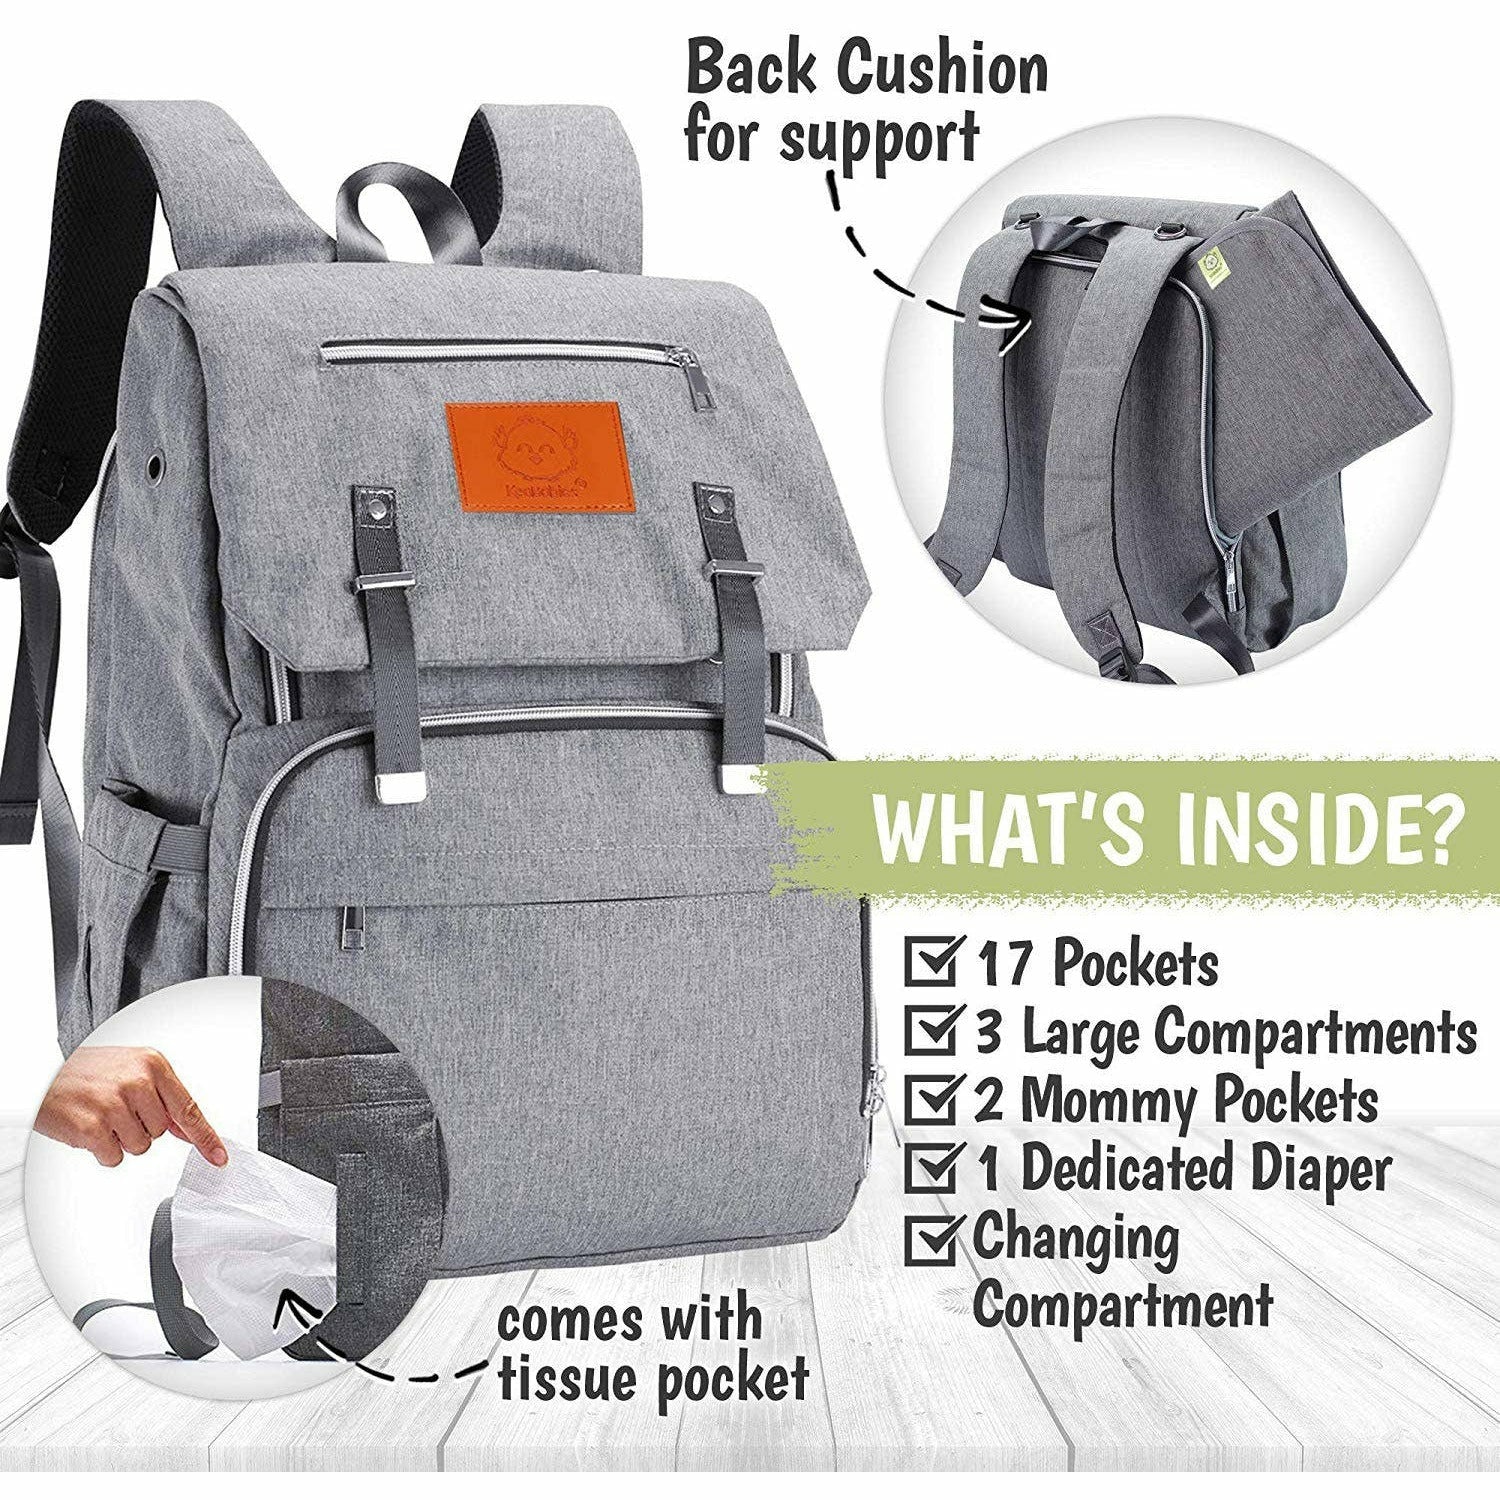 KeaBabies Diaper Bag with Changing Pad - Waterproof Baby Bag, Travel Diaper  Bags, Baby Diaper Bag Backpack